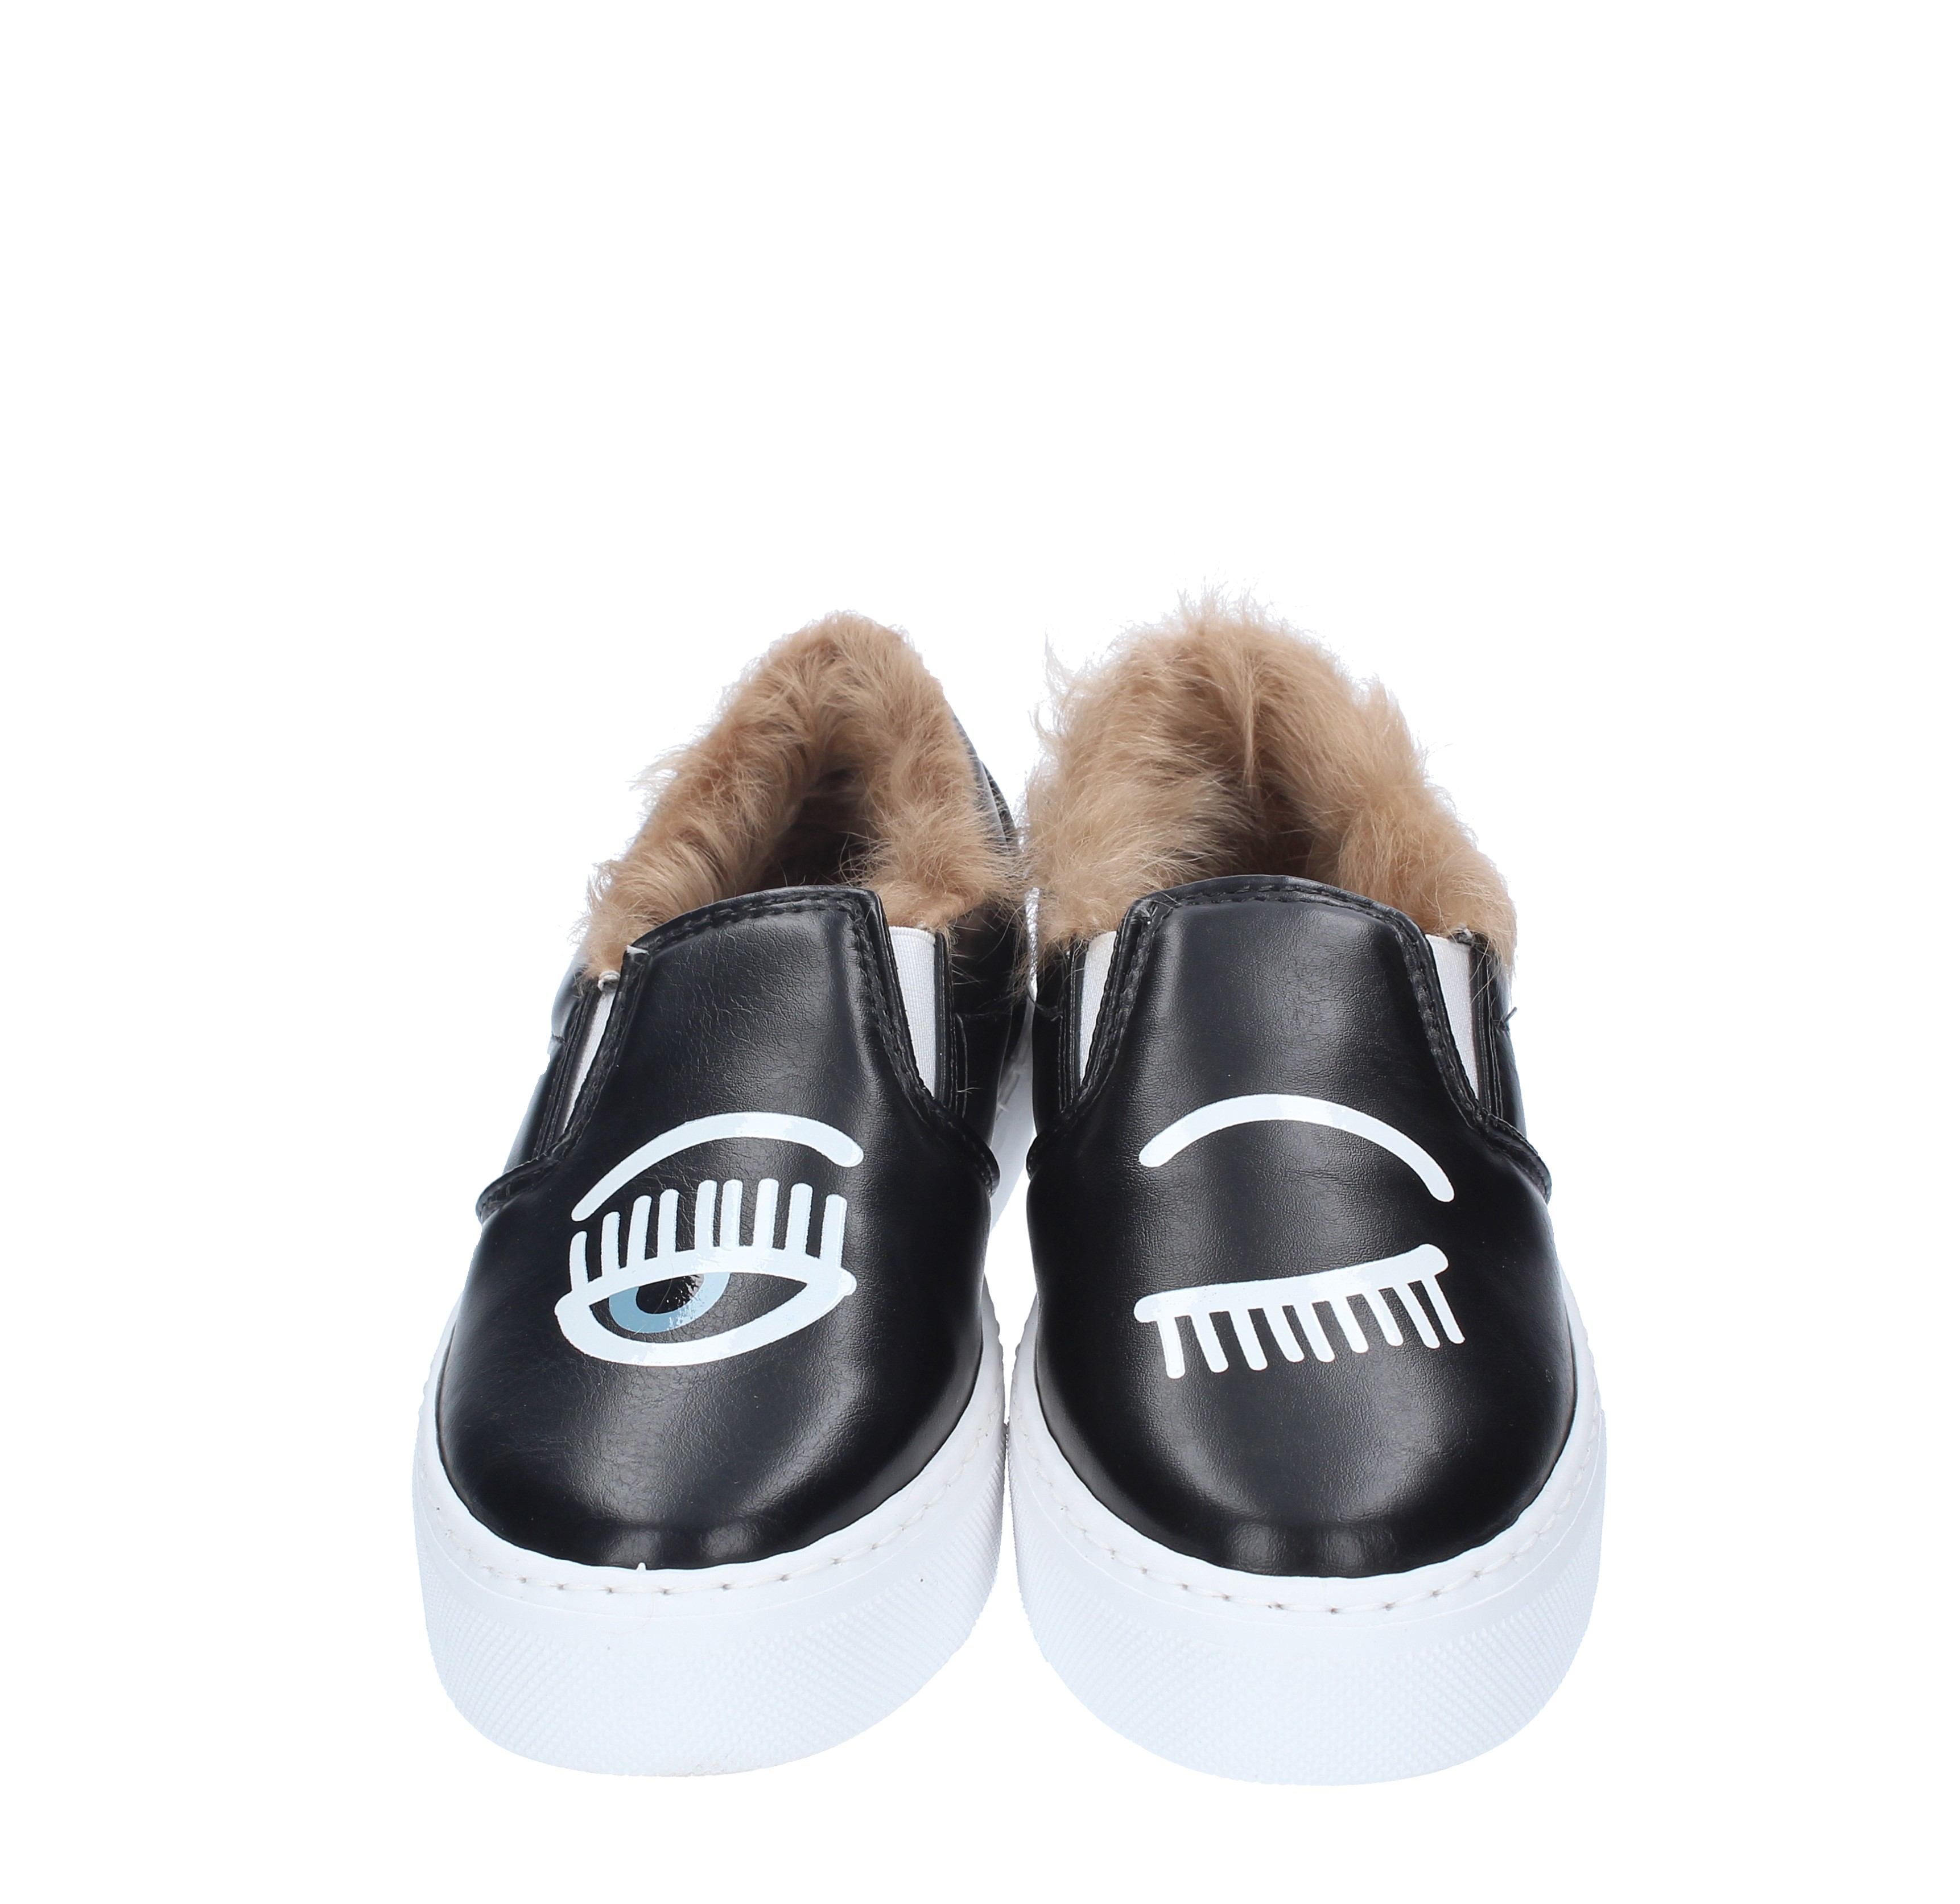 Loafers and slip-ons Black - CHIARA FERRAGNI - Ginevra calzature